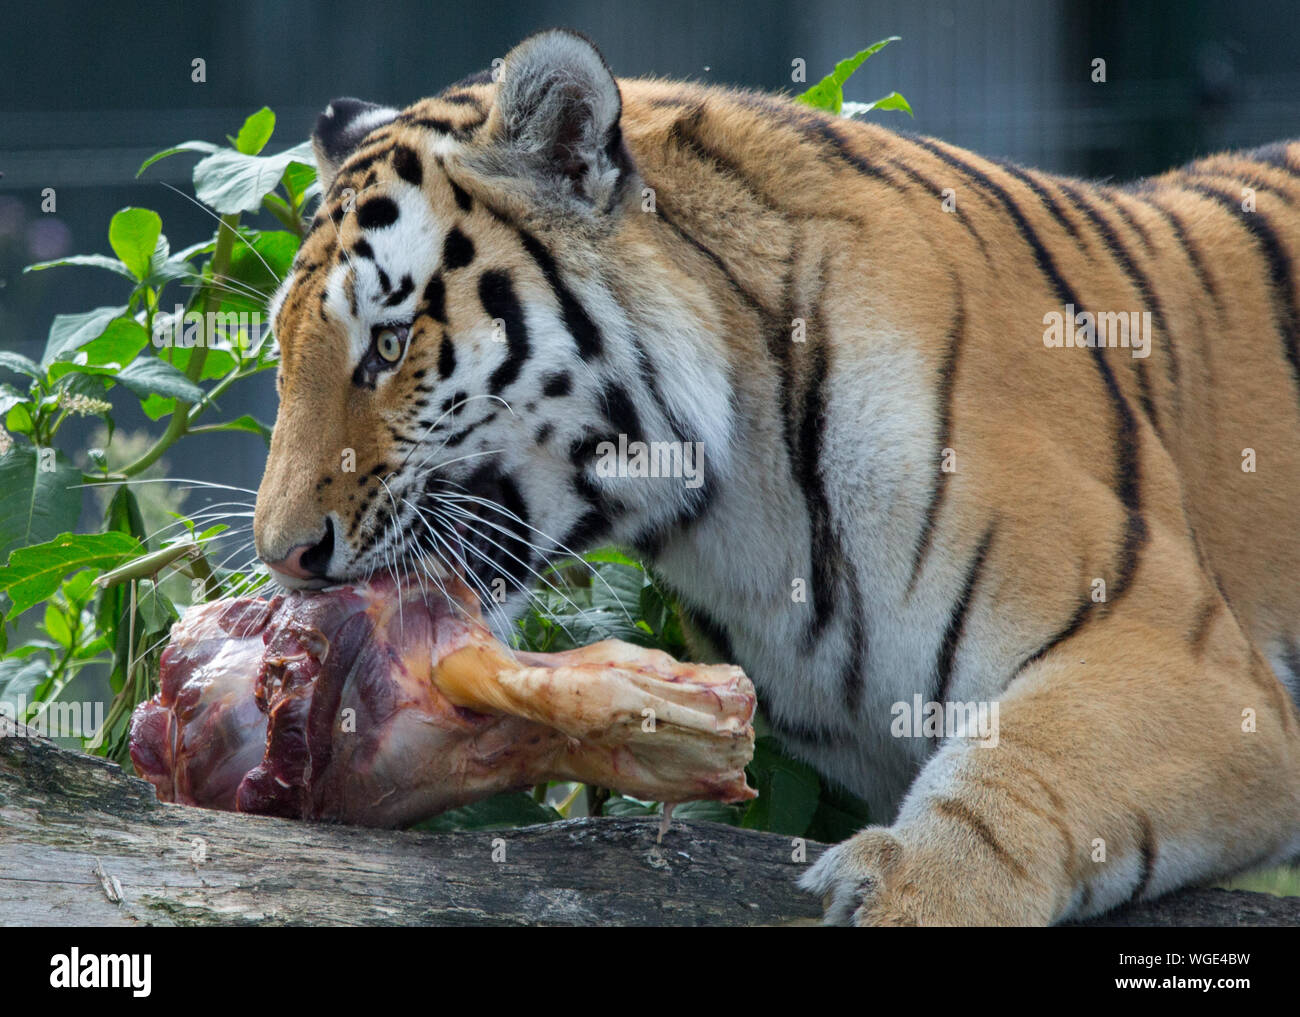 Close-up Of Tiger Eating Animal Bone Stock Photo - Alamy